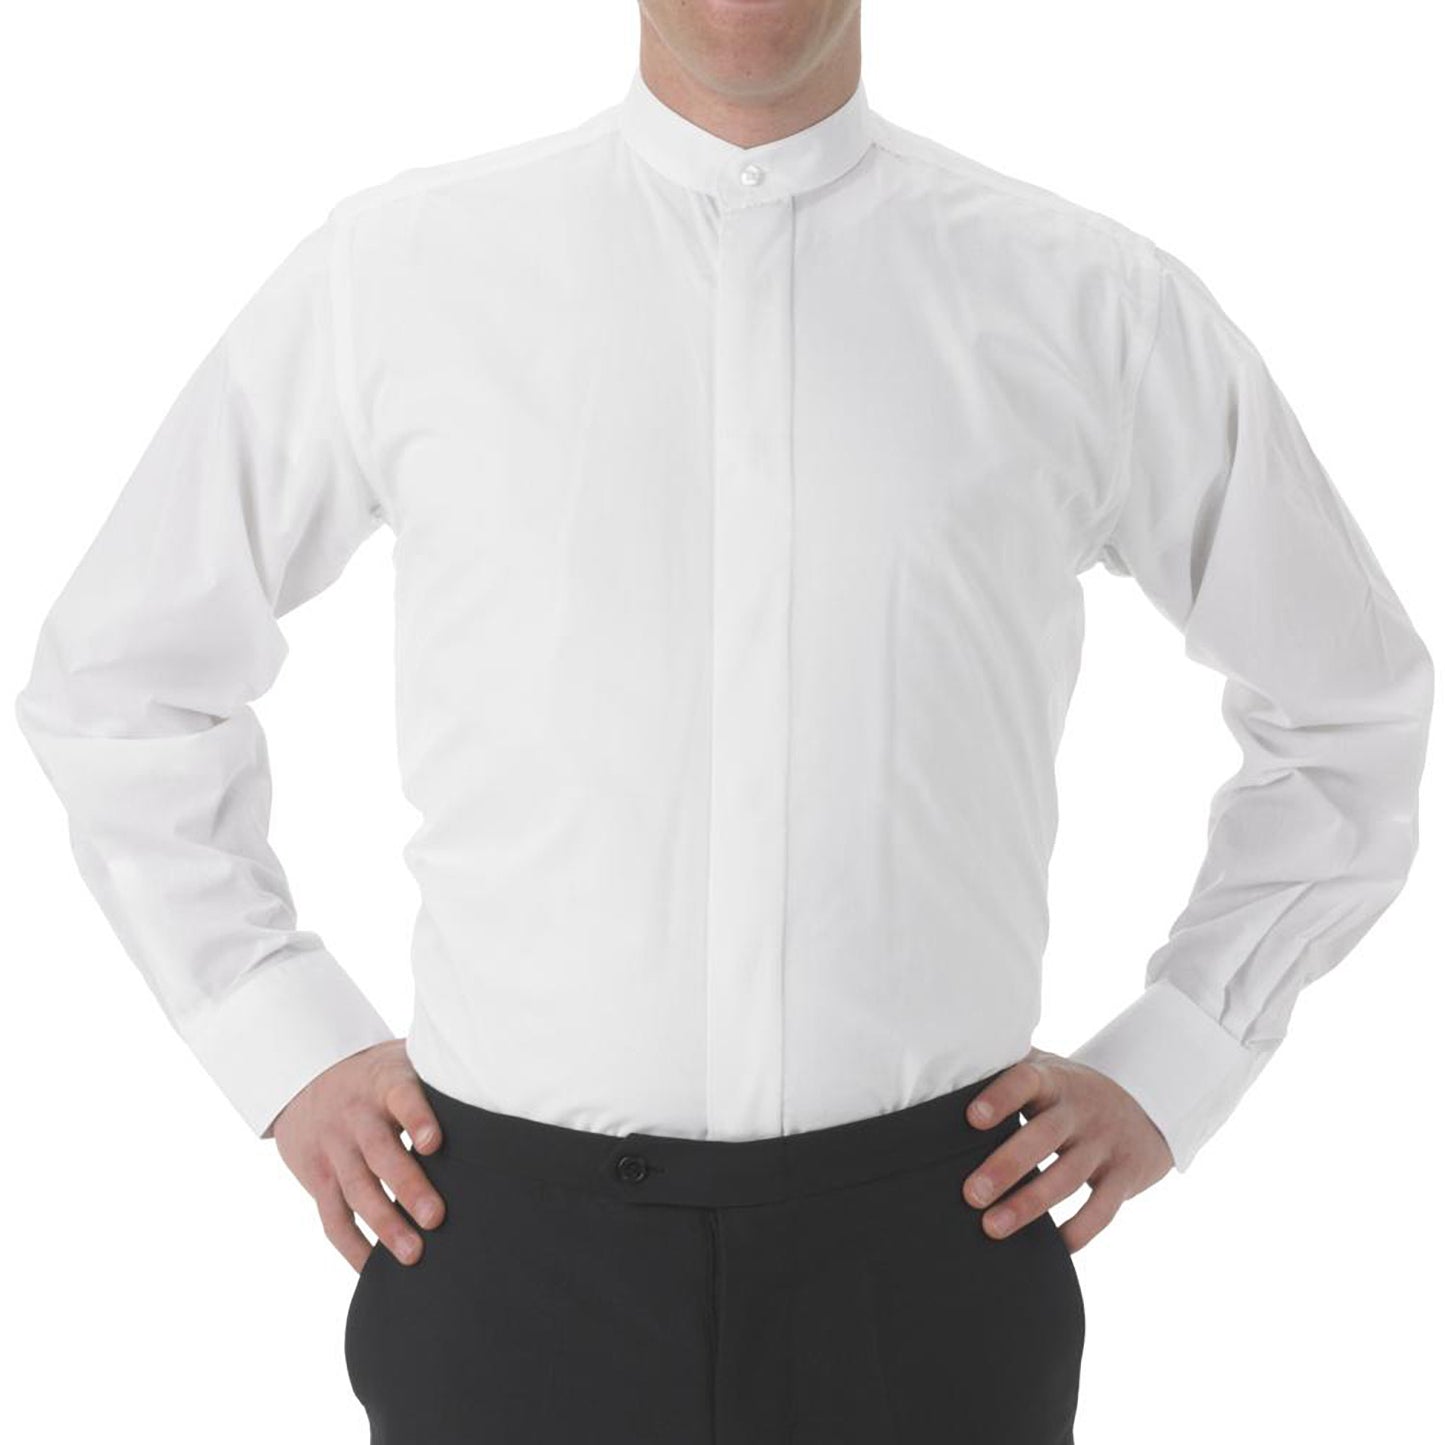 Banded Collar Dress Shirt - White or Black